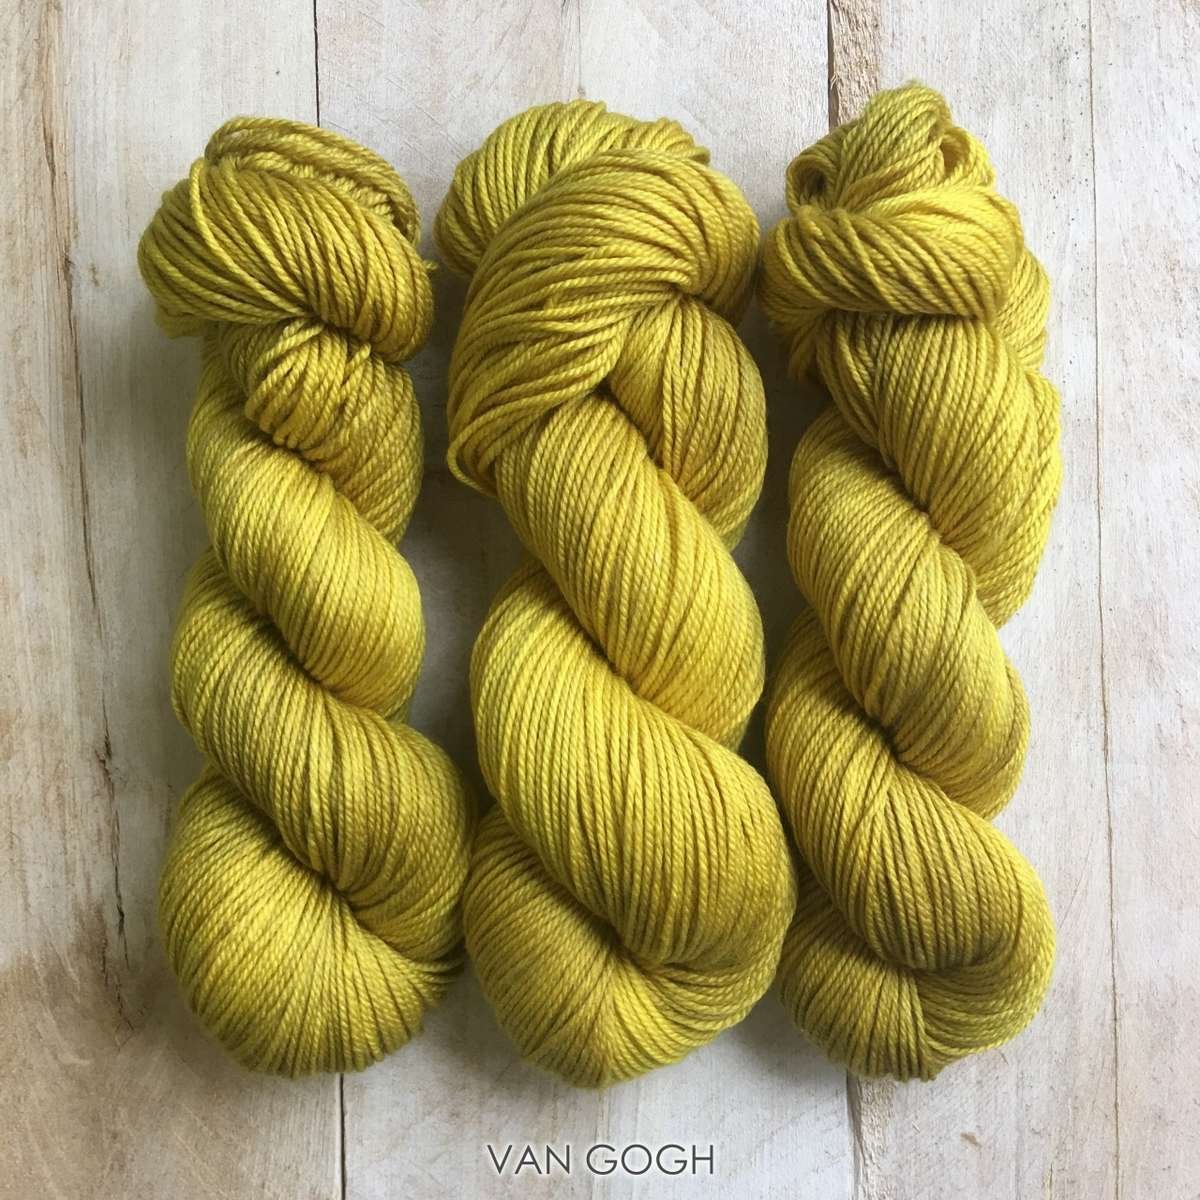 Hand-dyed yarn Louise Robert Van Gogh